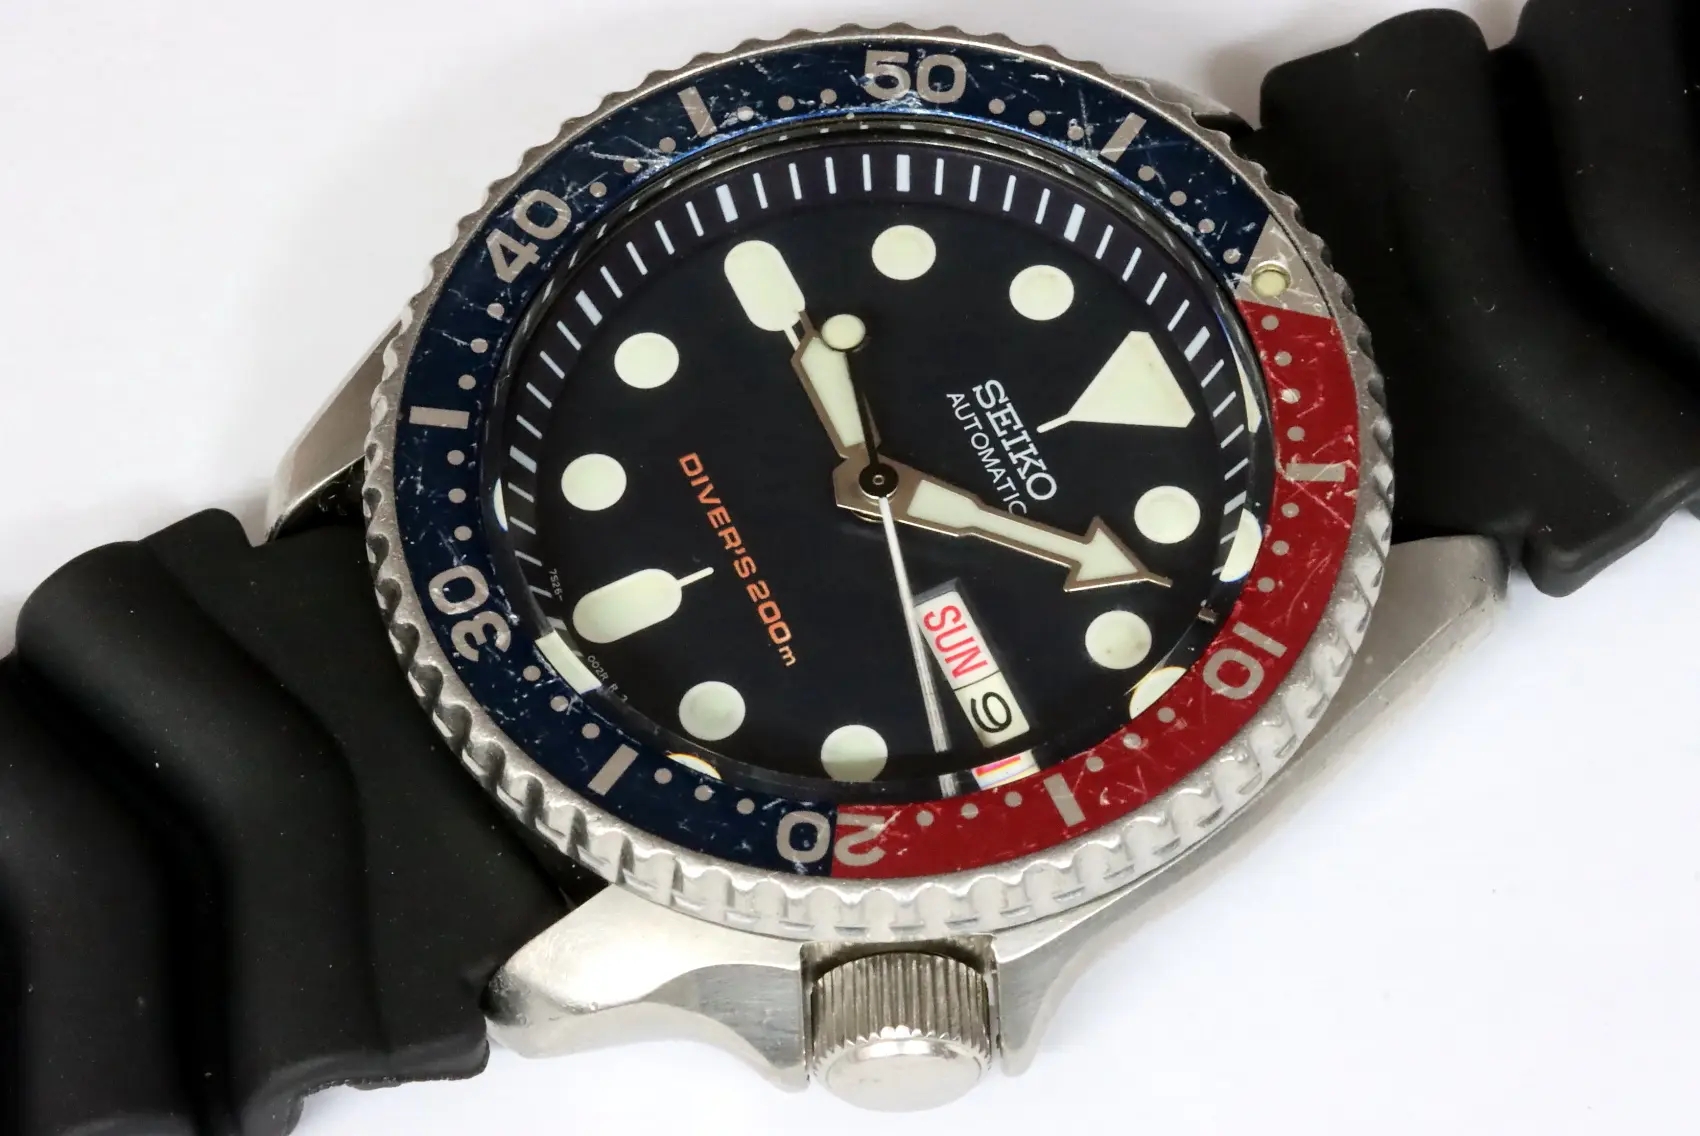 Seiko 7S26-0020 SKX007 automatic diver's watch